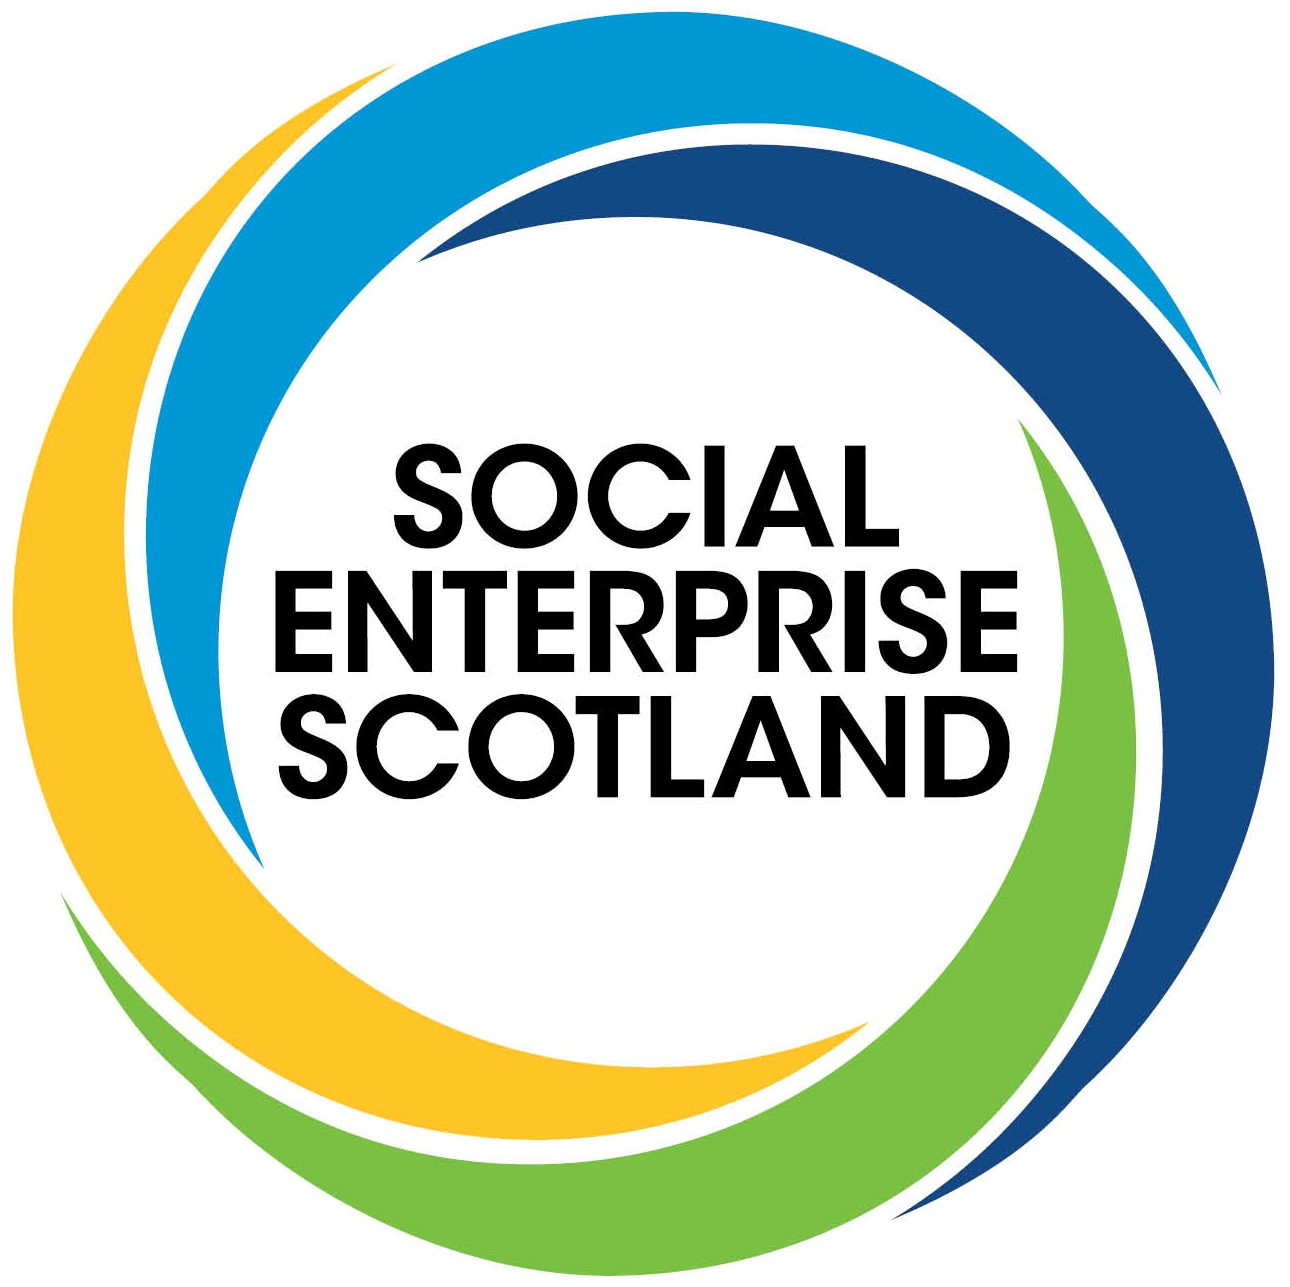 Social enterprises contribute over £2.63bn to the Scottish economy